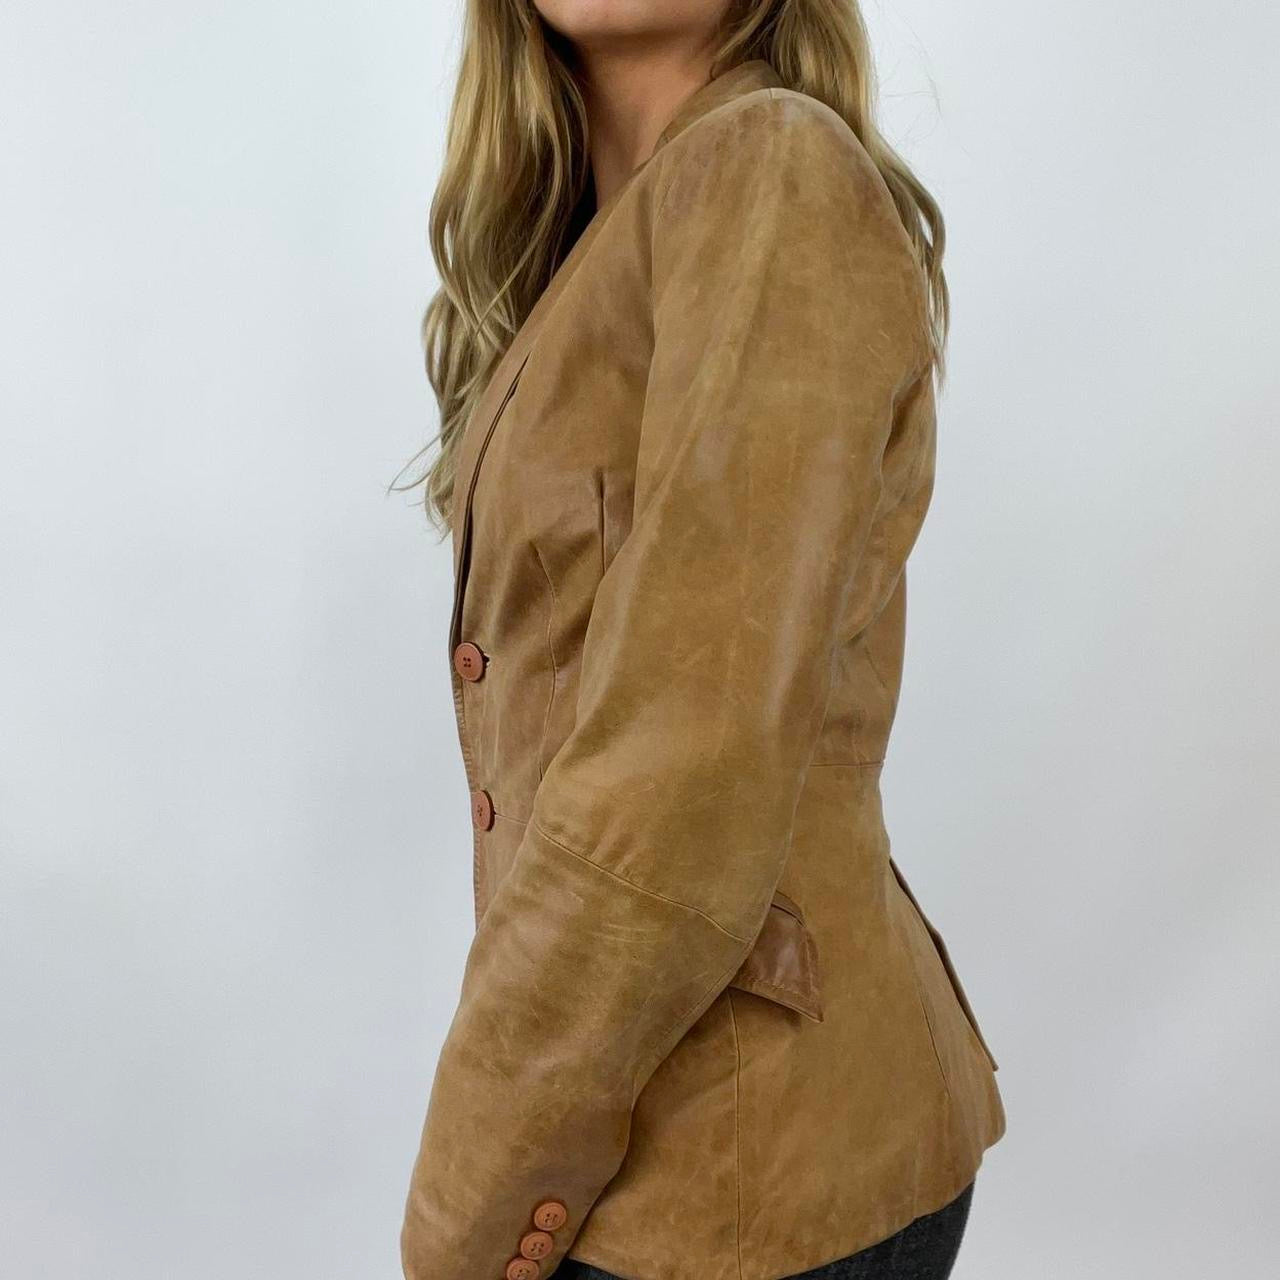 💻 BEST PICKS, CITY GIRL DROP | large brown old label zara leather jacket